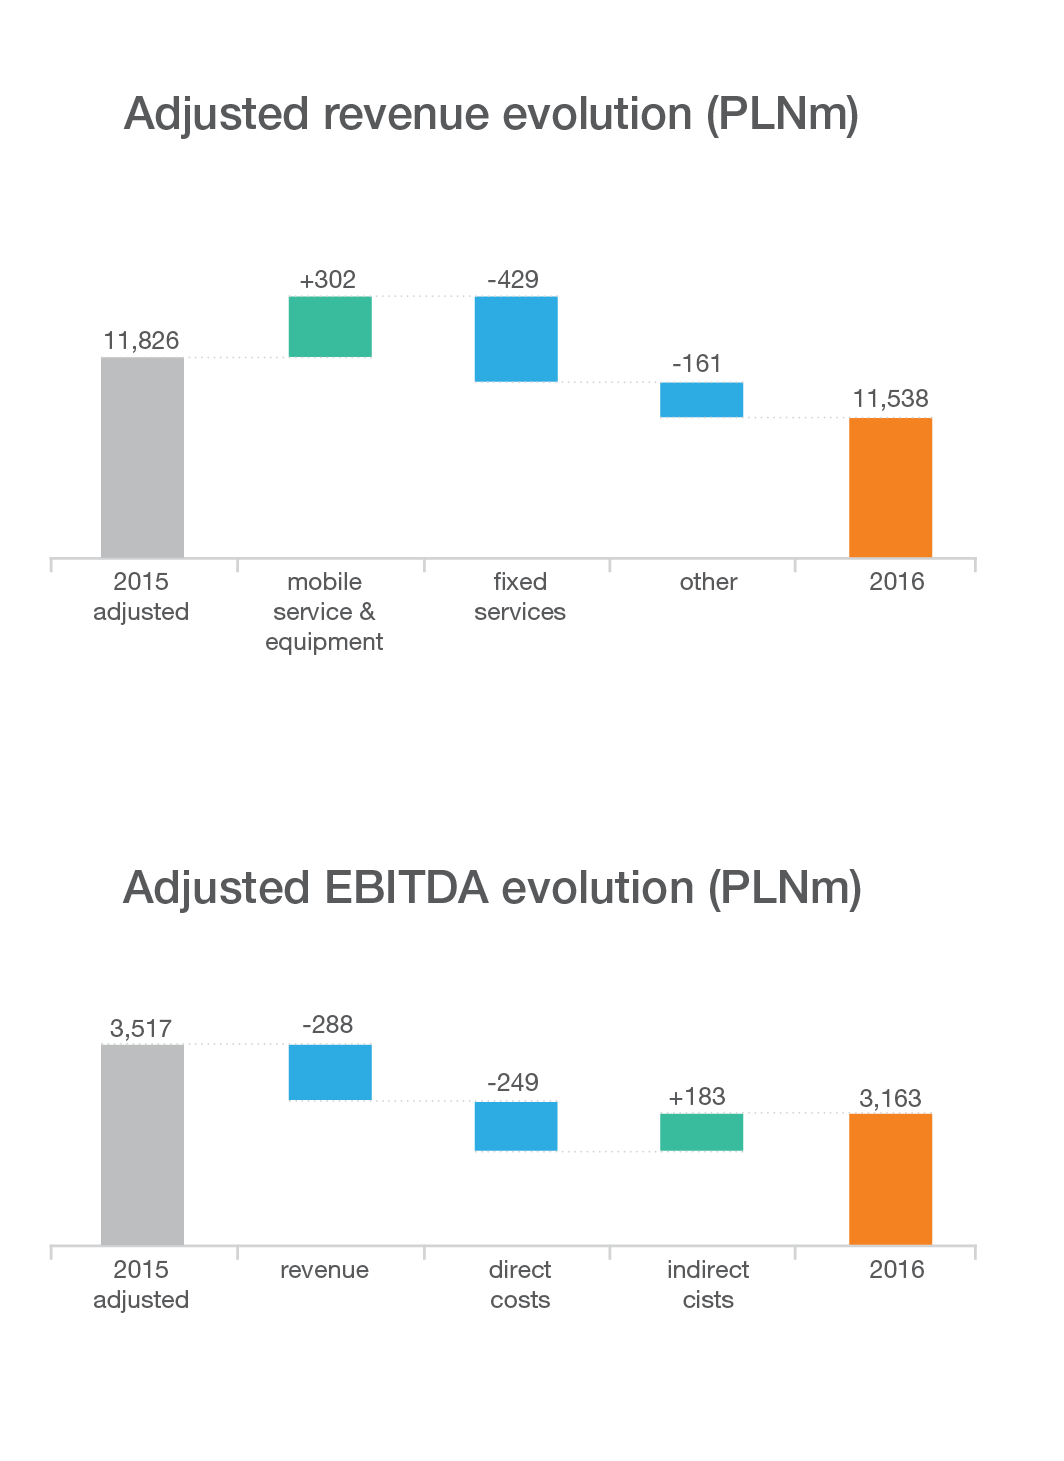 Adjusted revenue evolution (PLNm)